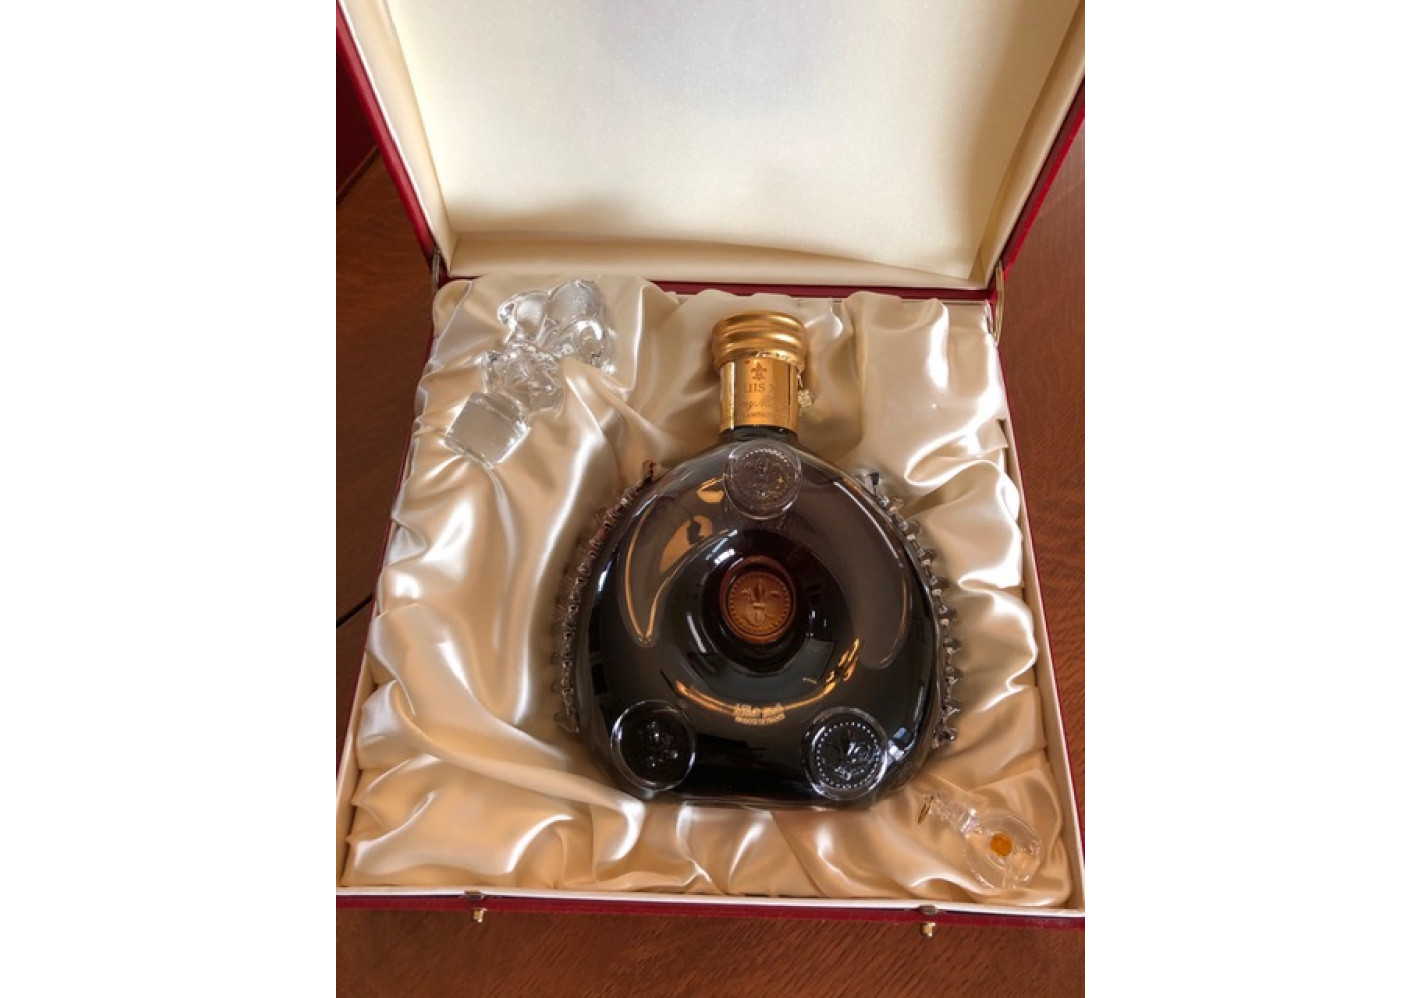 Rémy Martin Louis XIII Magnum Cognac